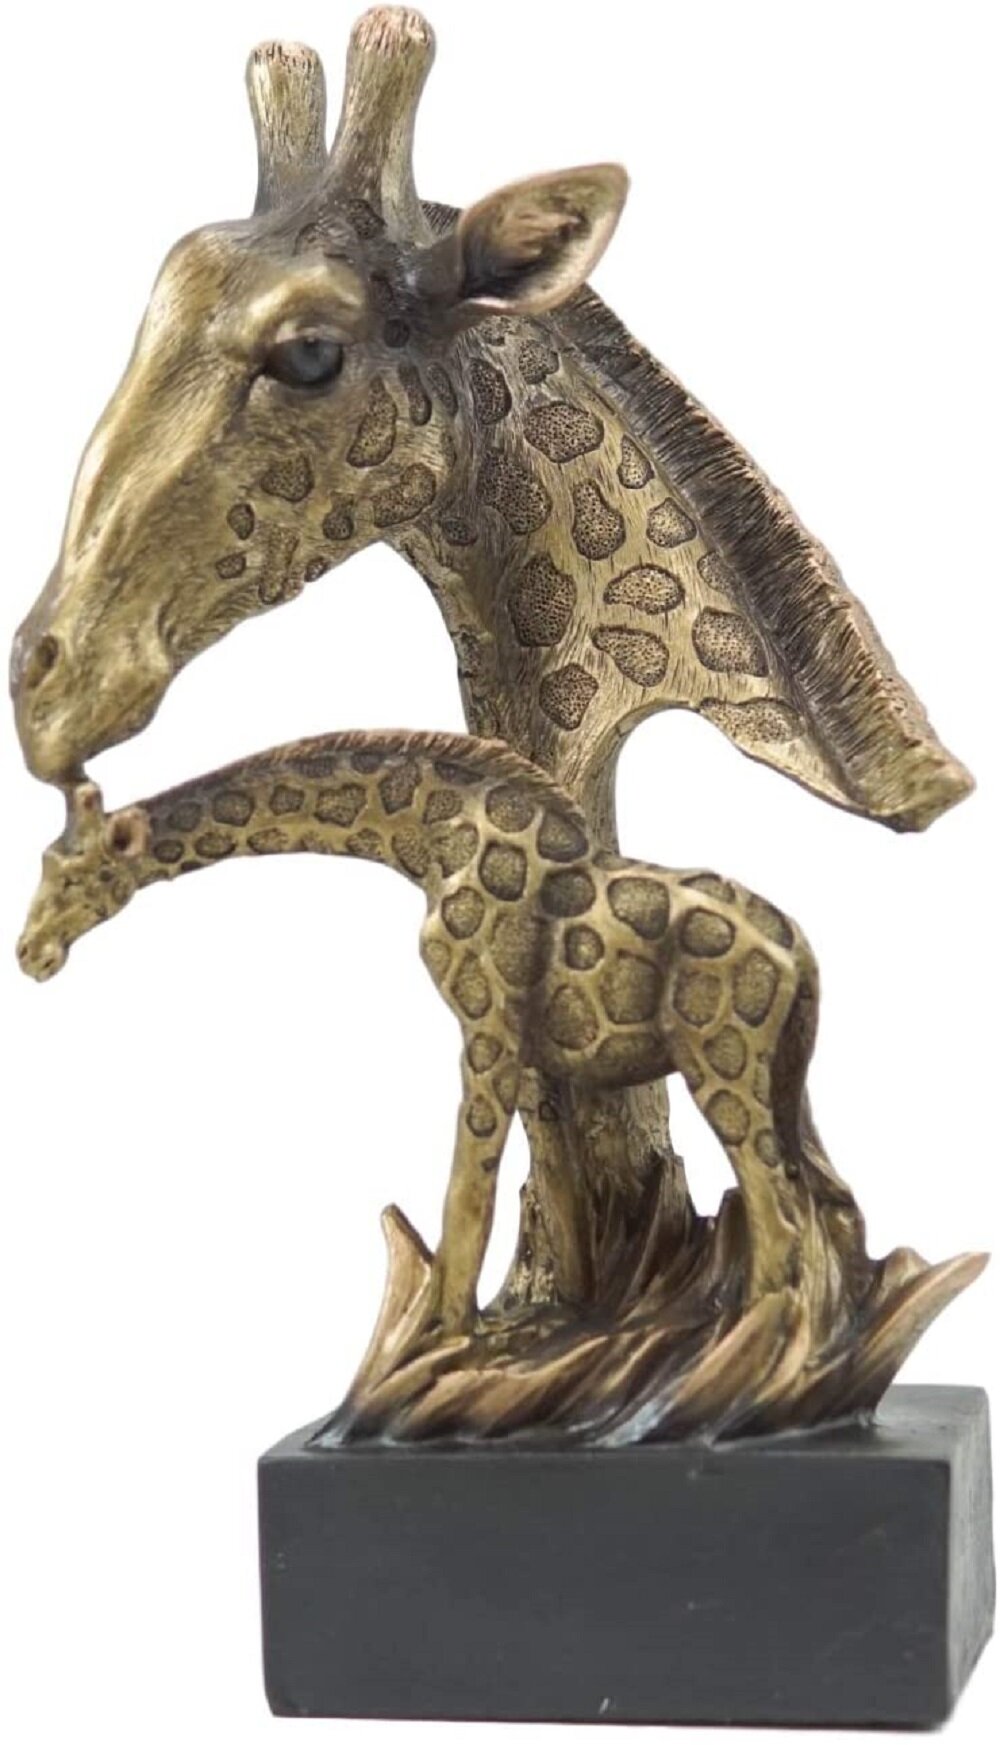 2 Modern Giraffe Figurines Antique Metallic Silver Sculptures Table Decor Accent 